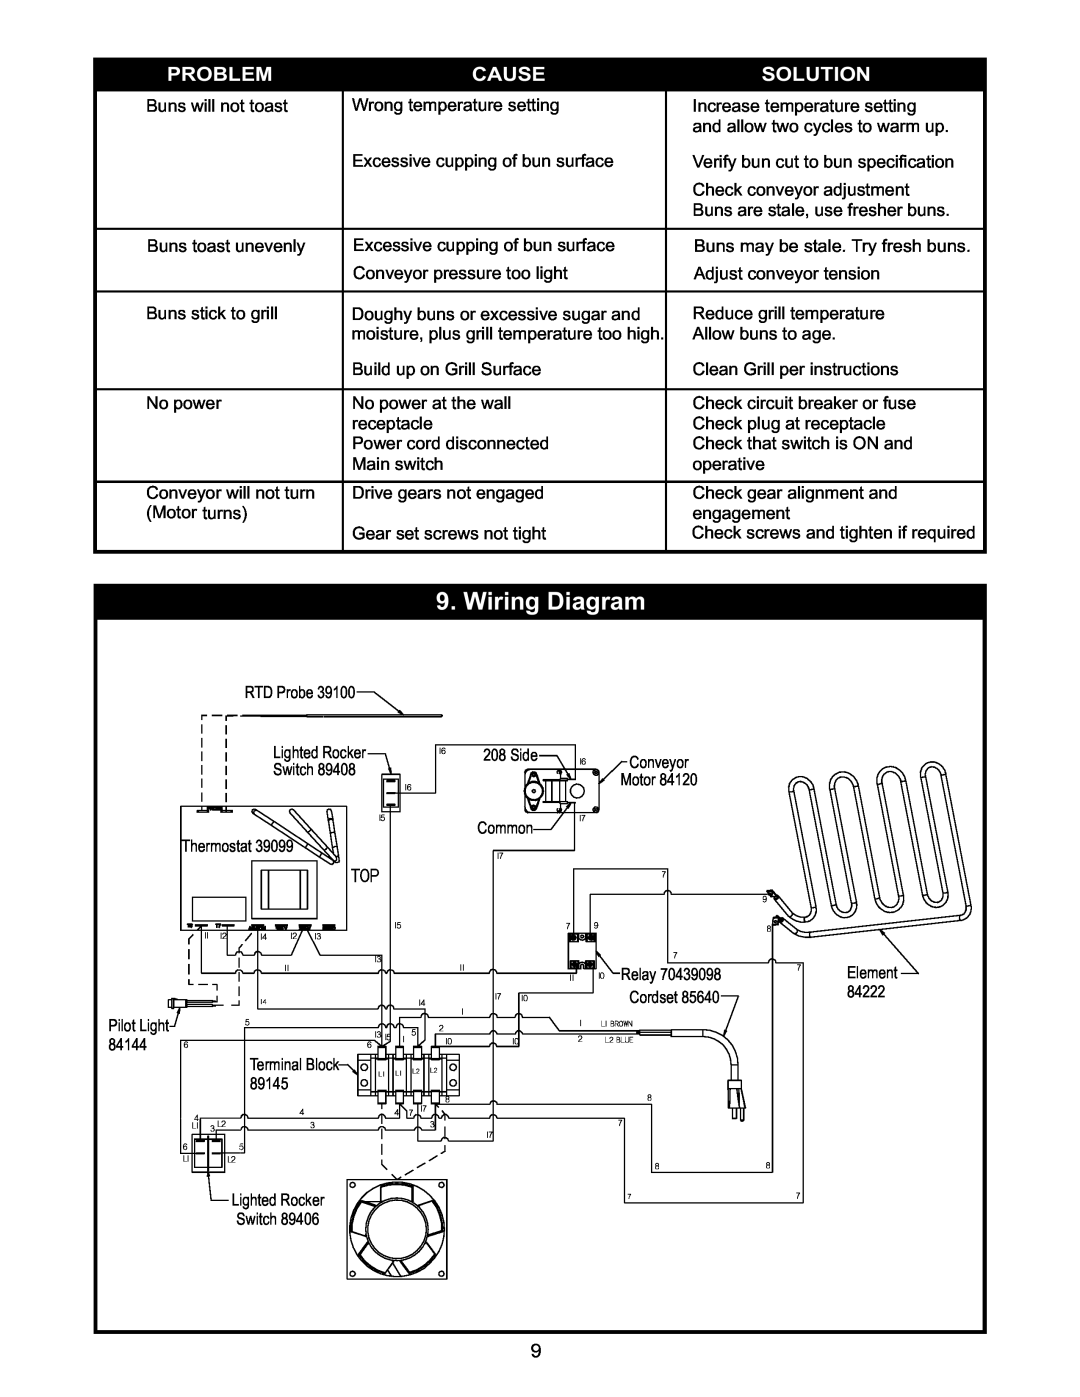 APW Wyott M95-2-JIB operating instructions Wiring Diagram, Problem, Cause, Solution 